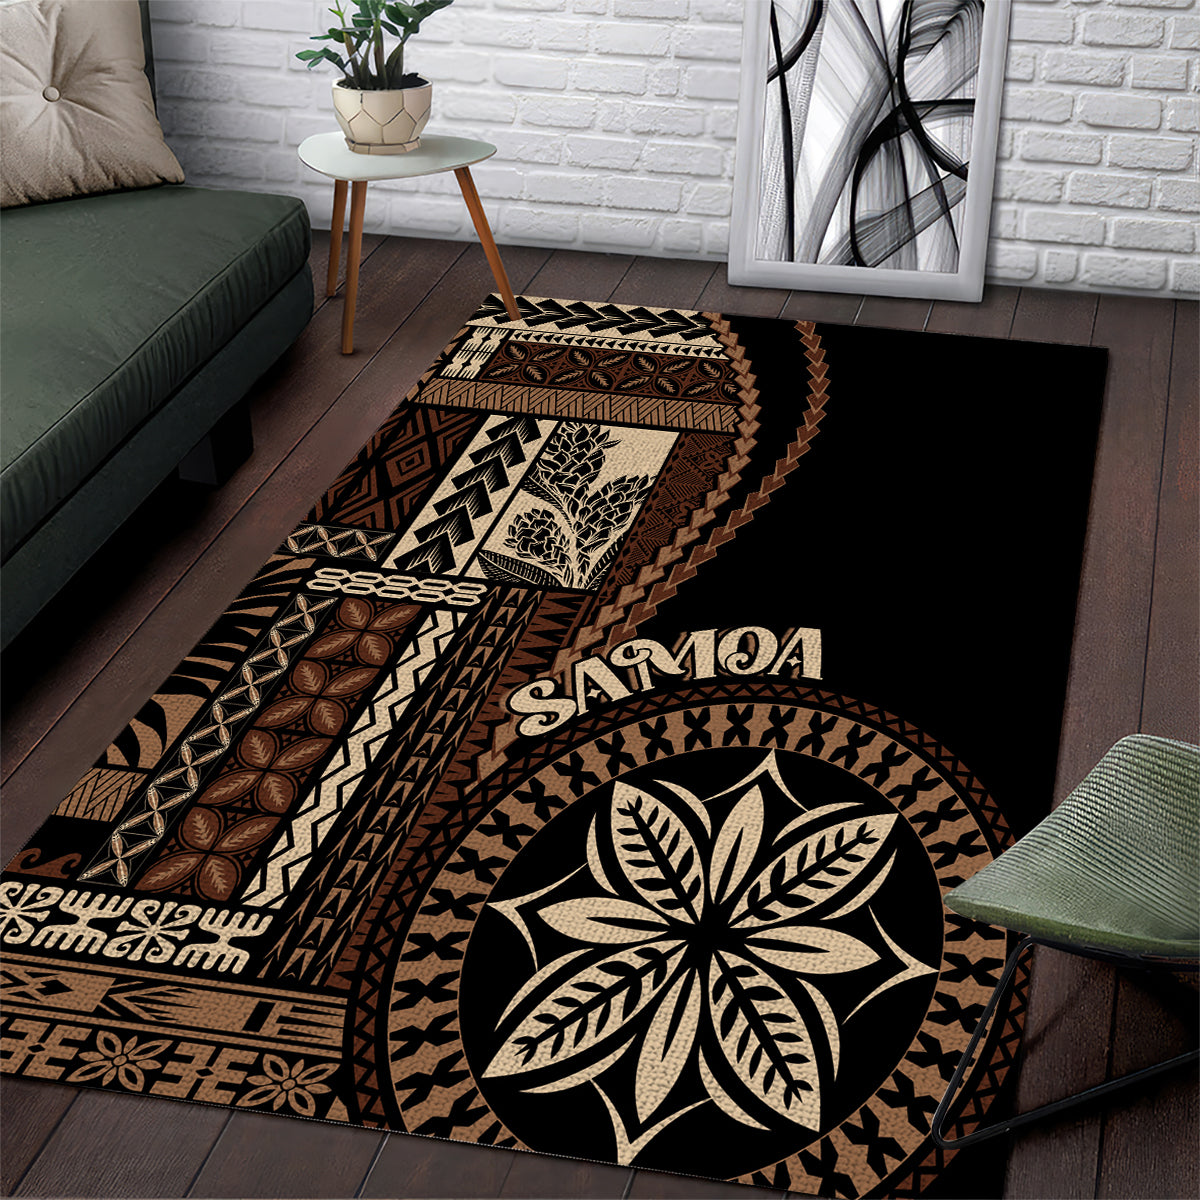 samoa-siapo-motif-area-rug-classic-style-black-ver